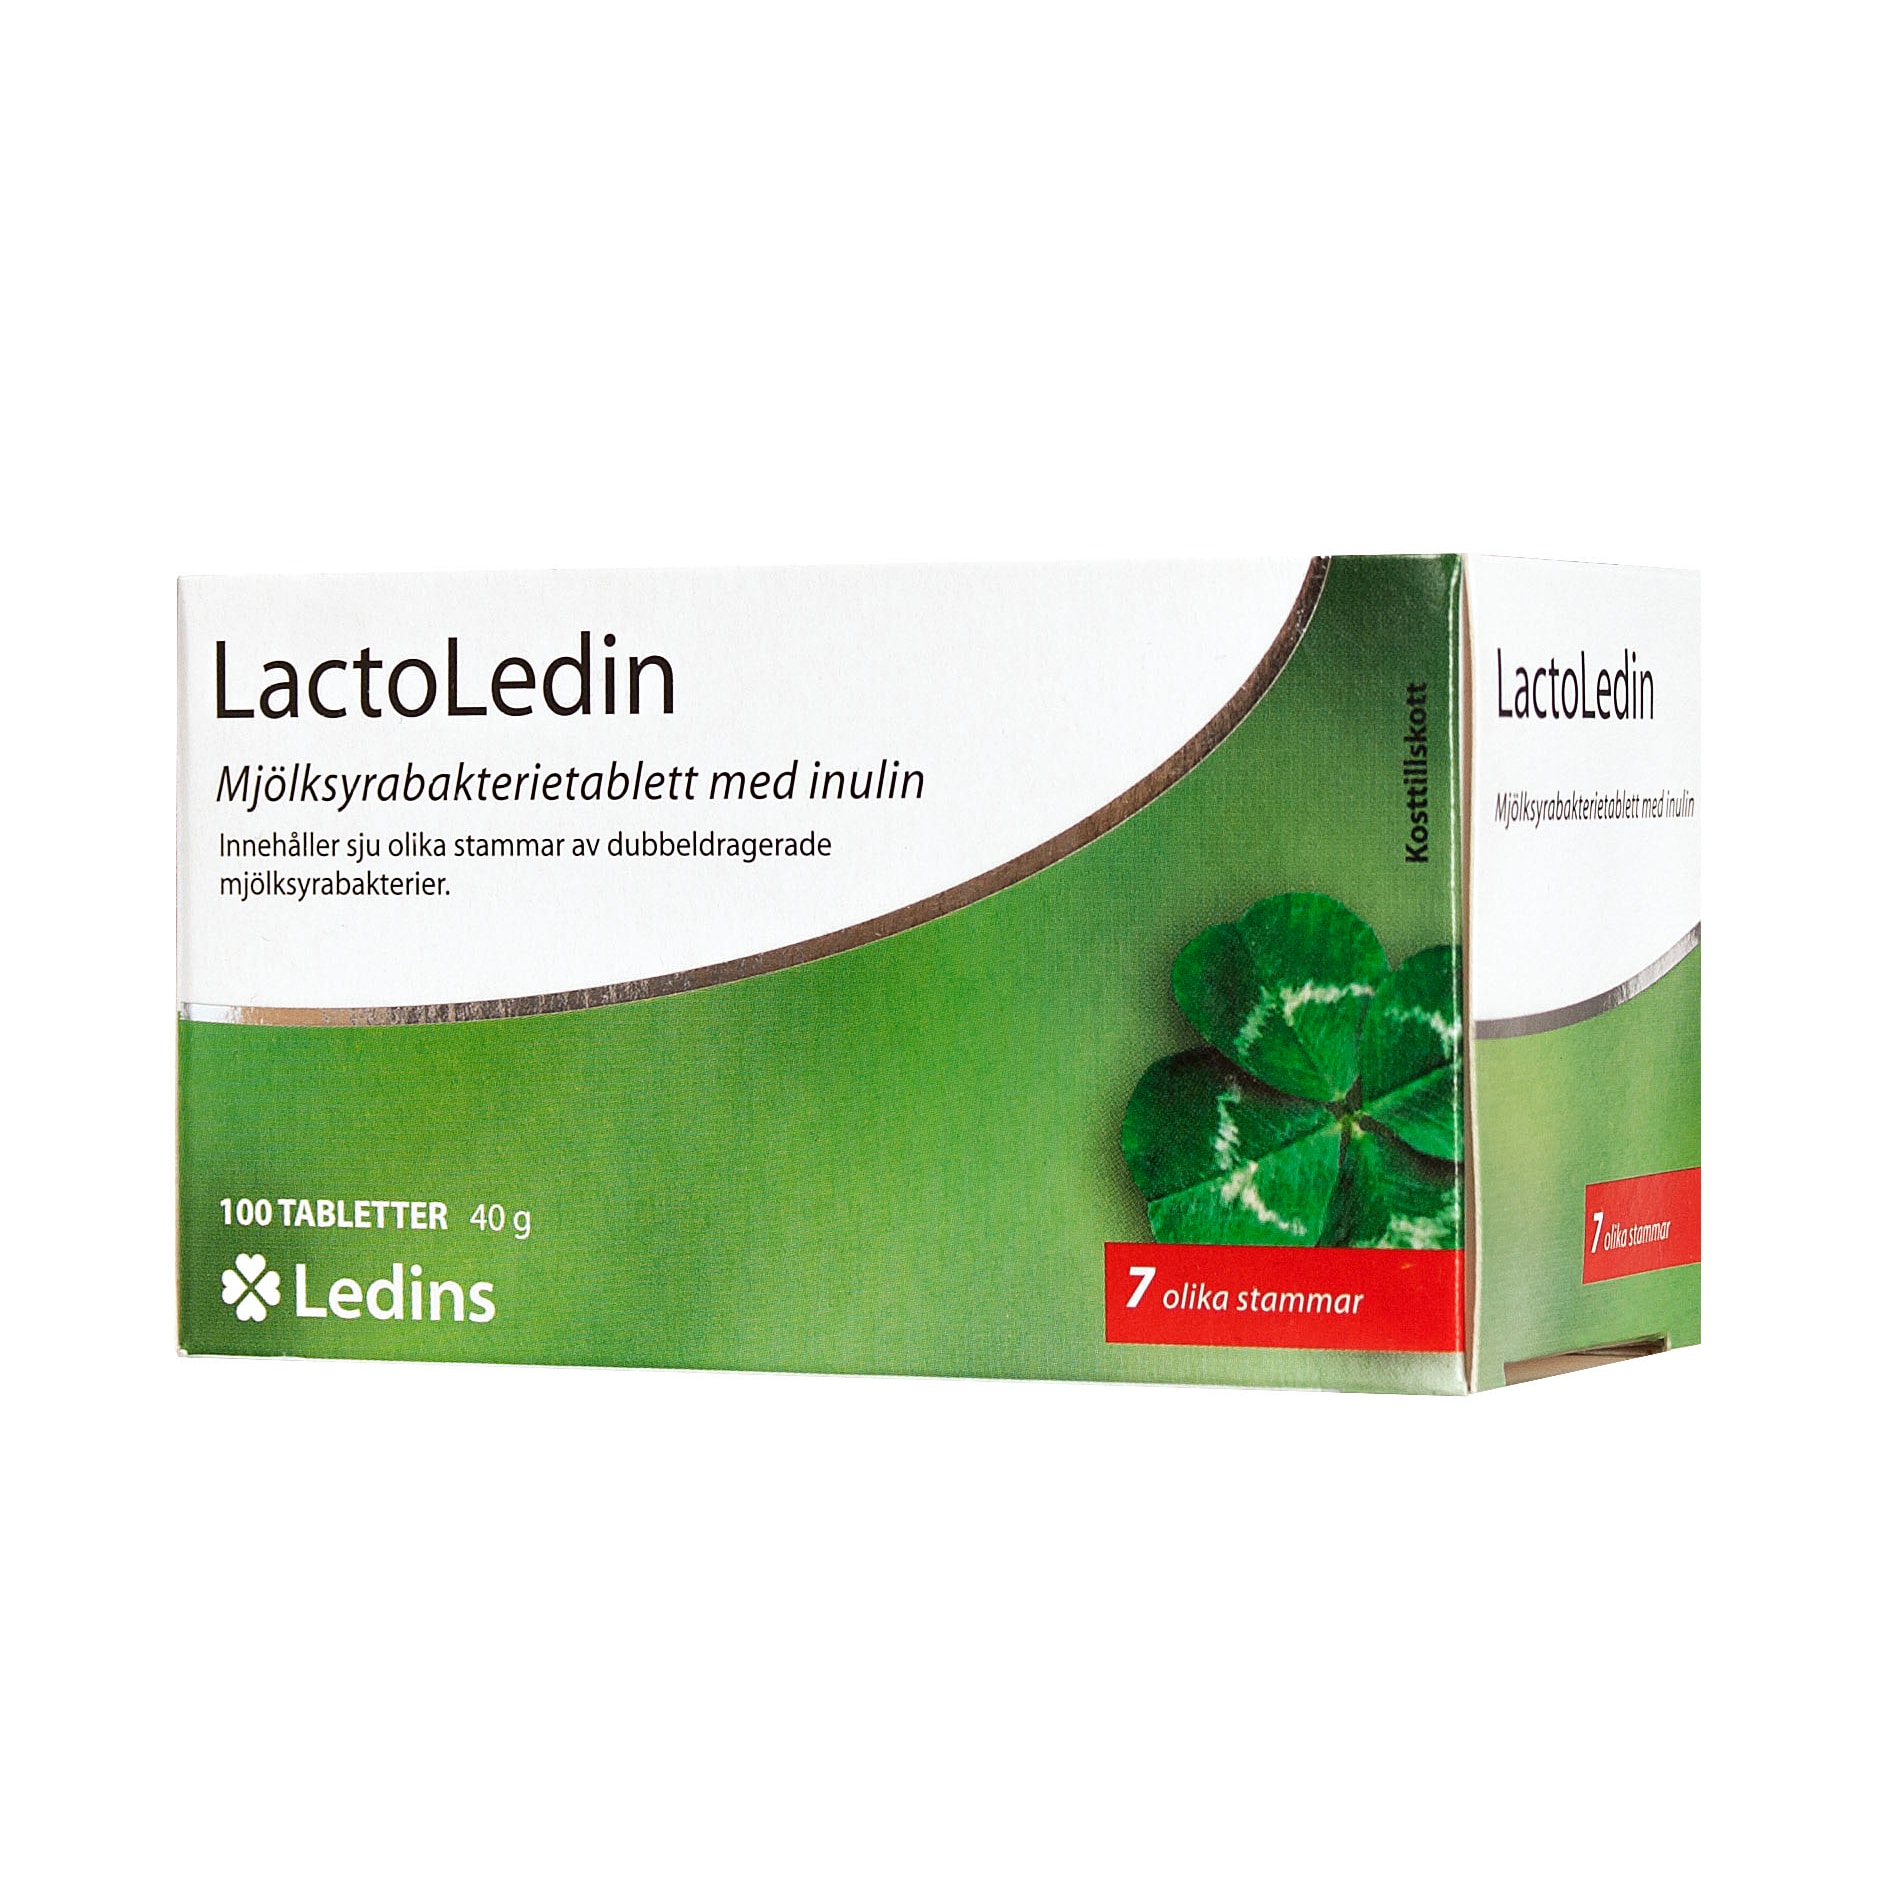 LactoLedin 100 tabletter